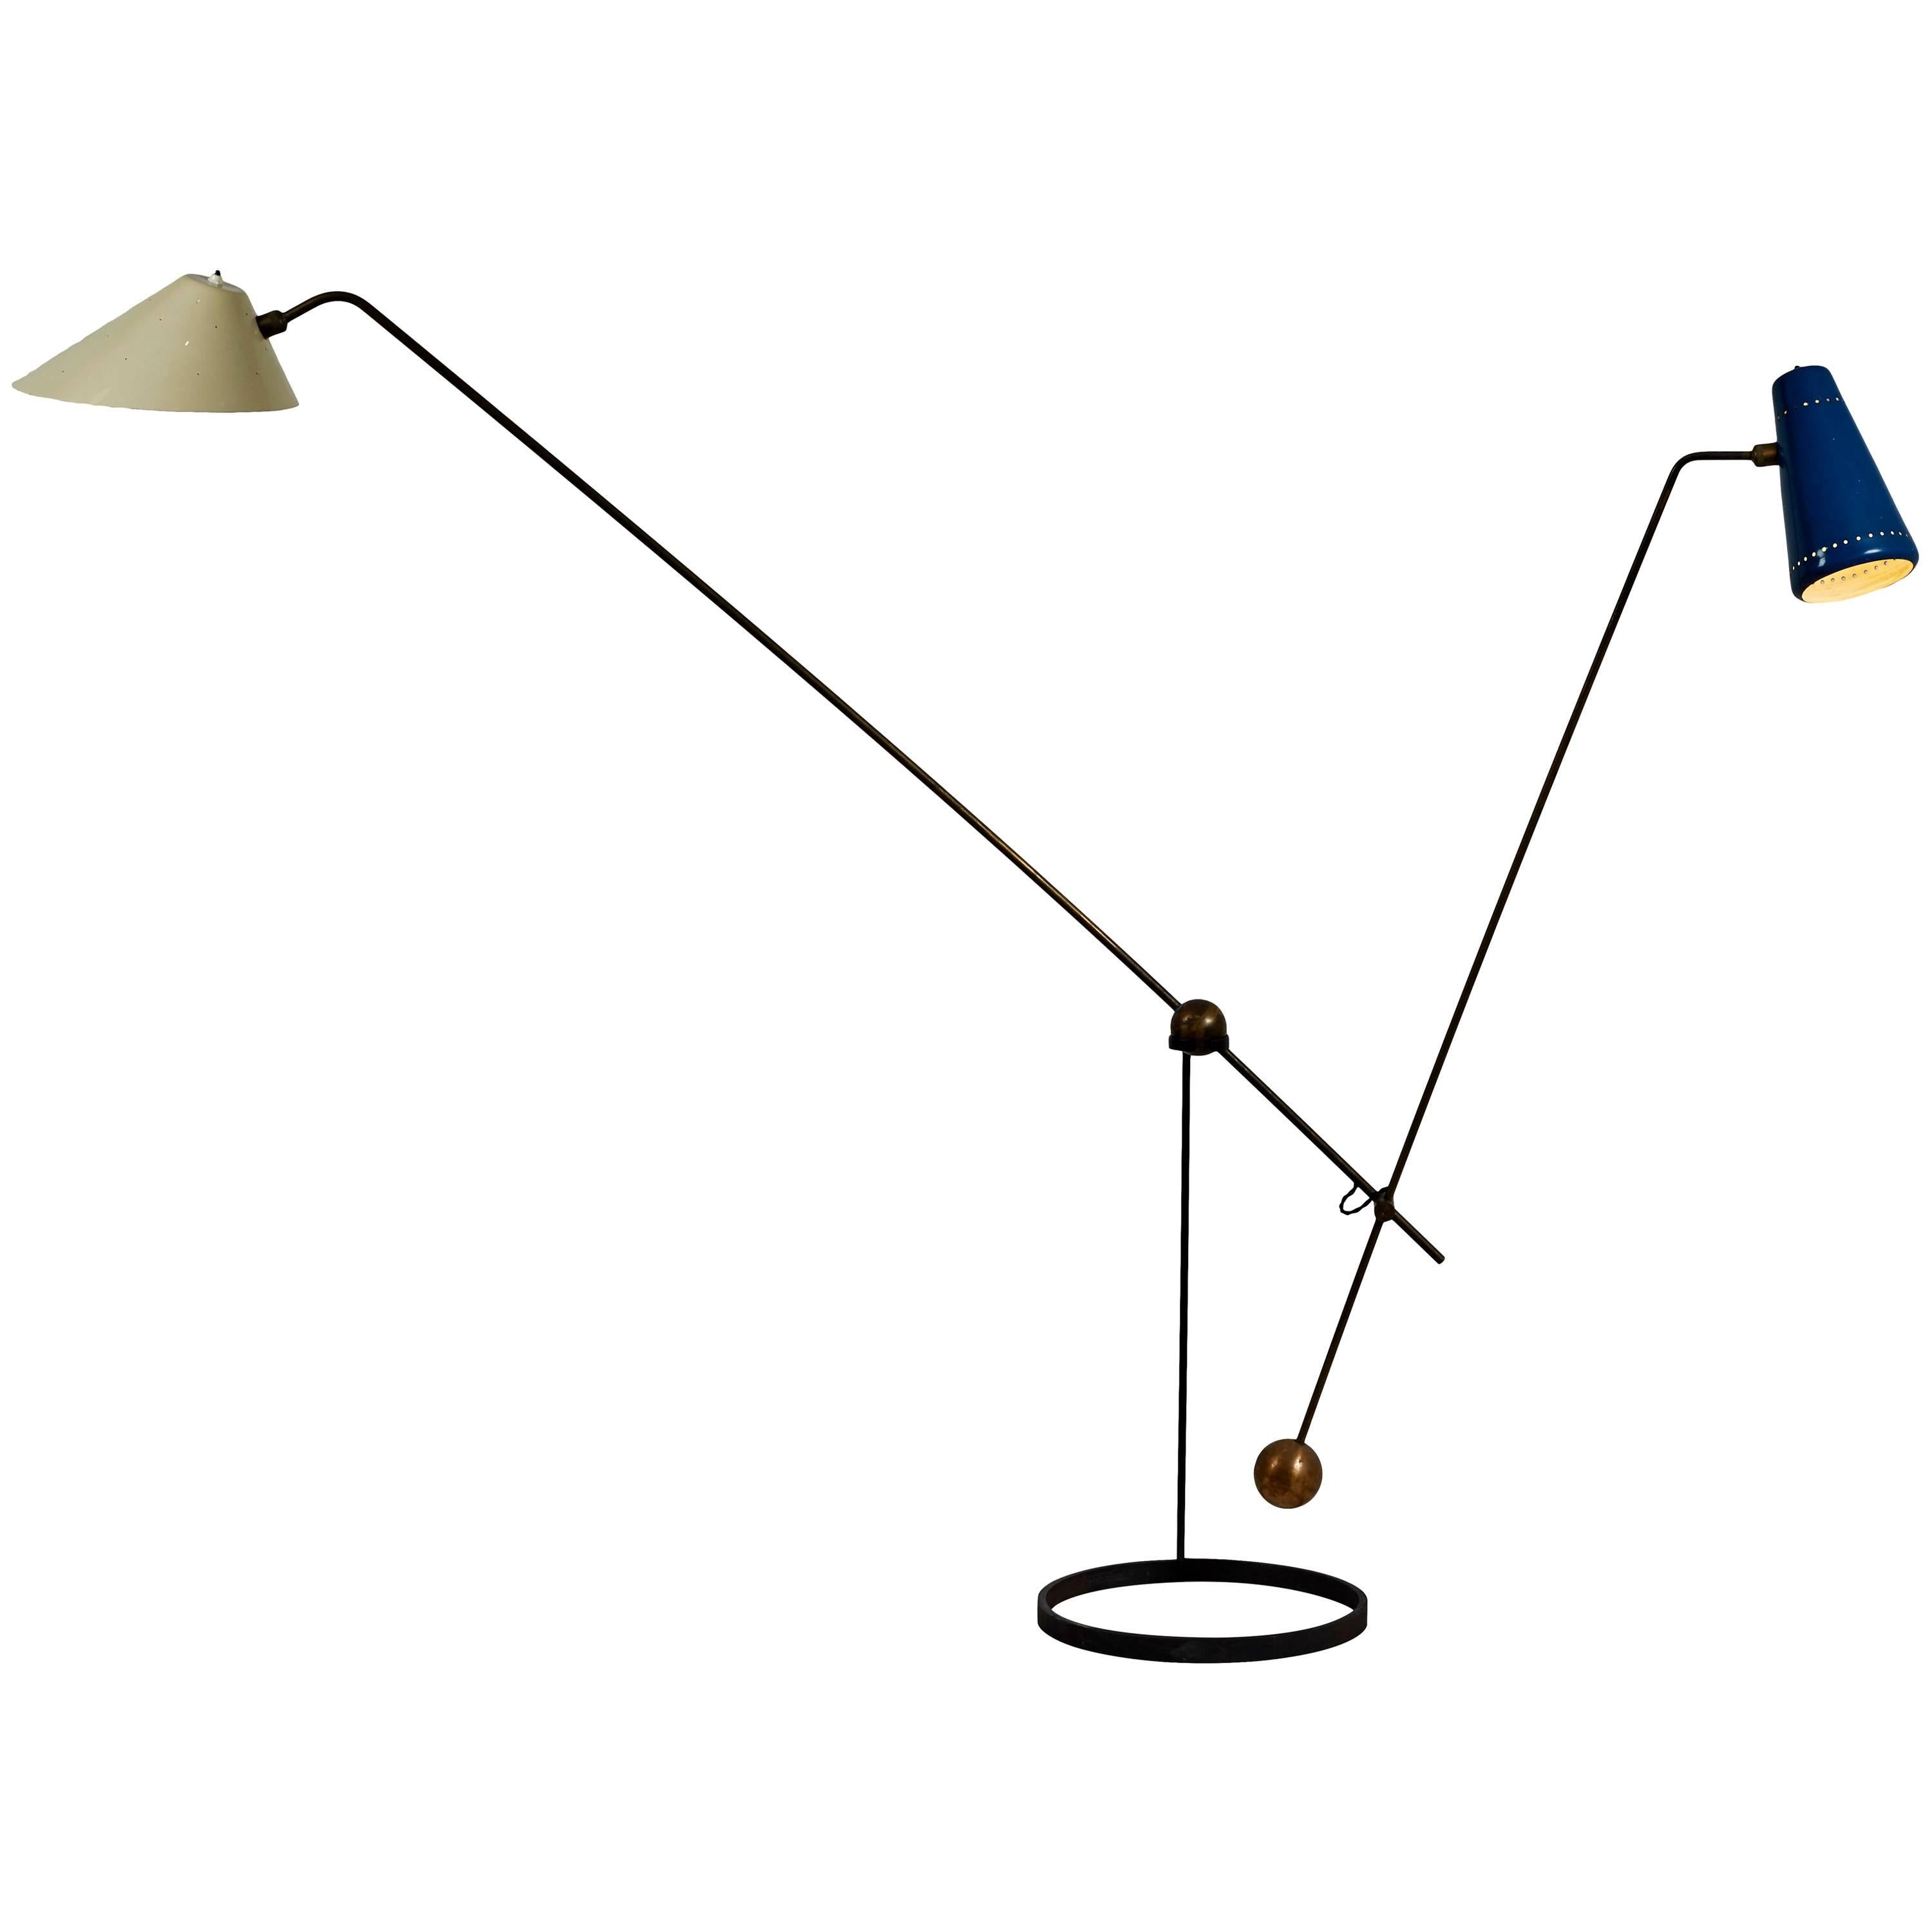 Equilibrium Double Branch Floor Lamp by Pierre Gauriche for Disderot